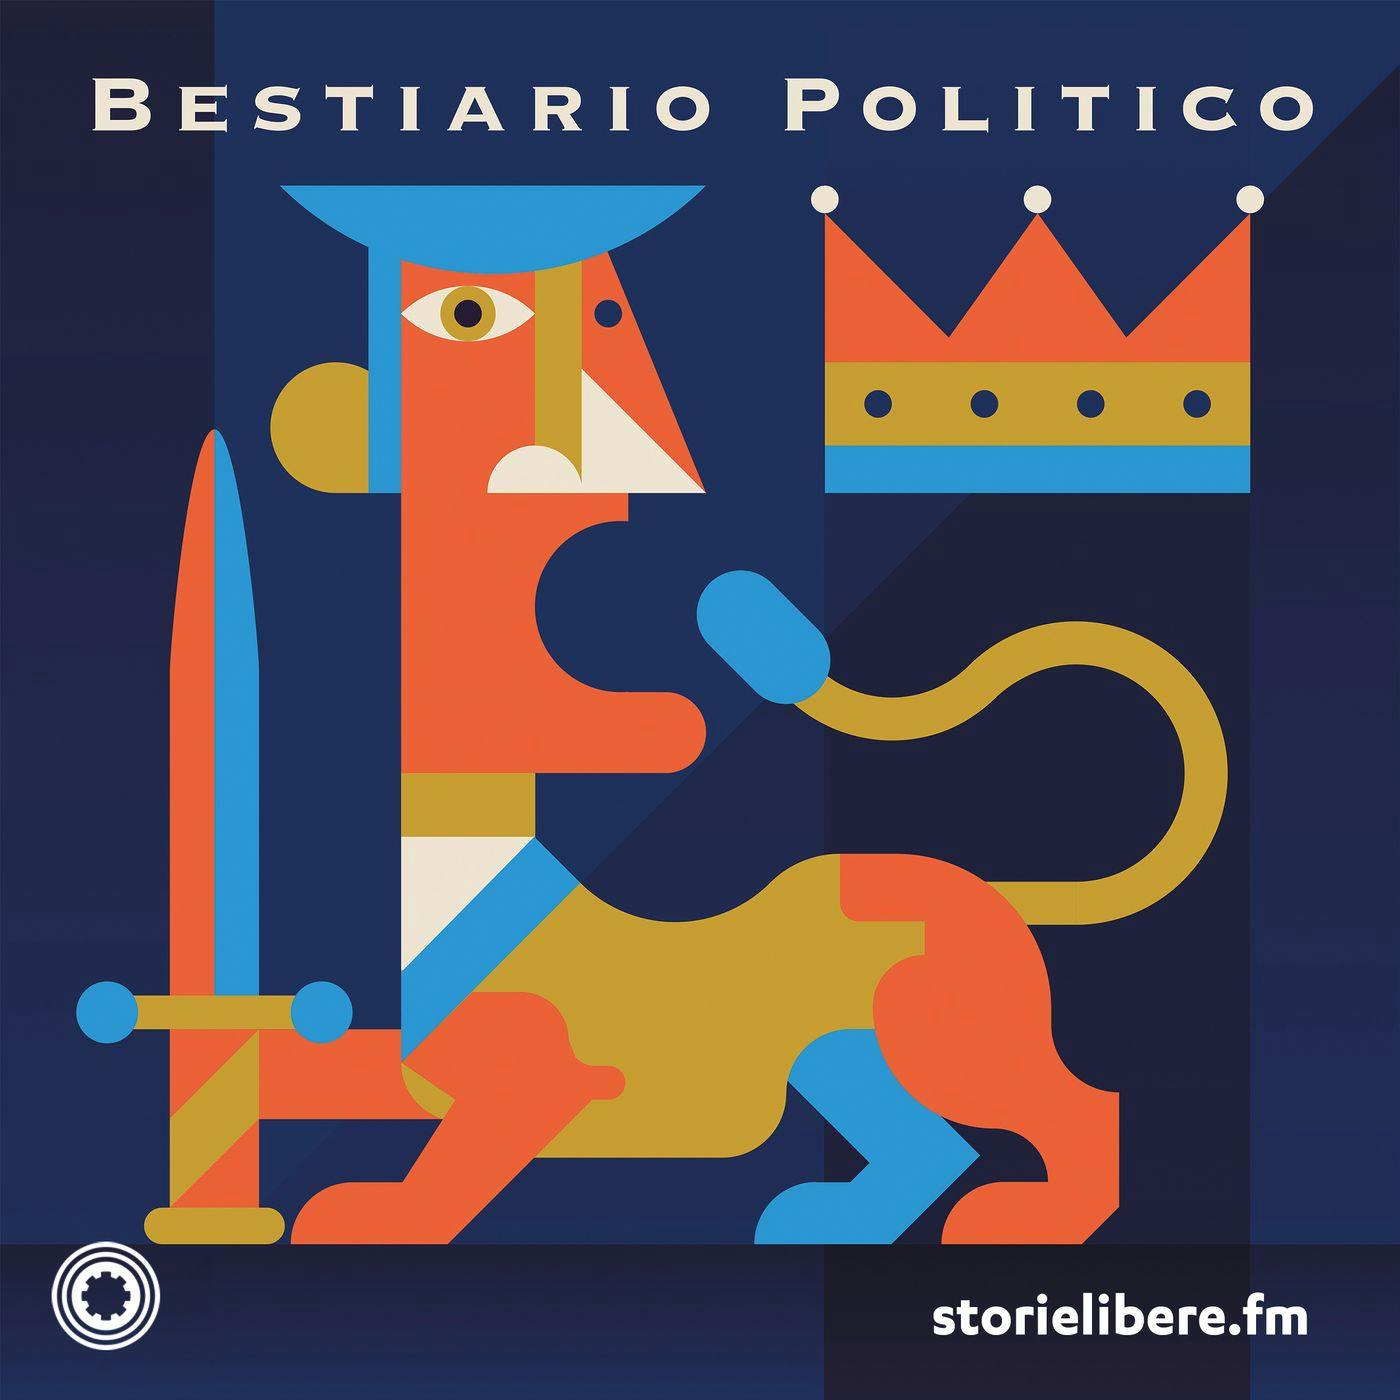 Trailer | Bestiario politico